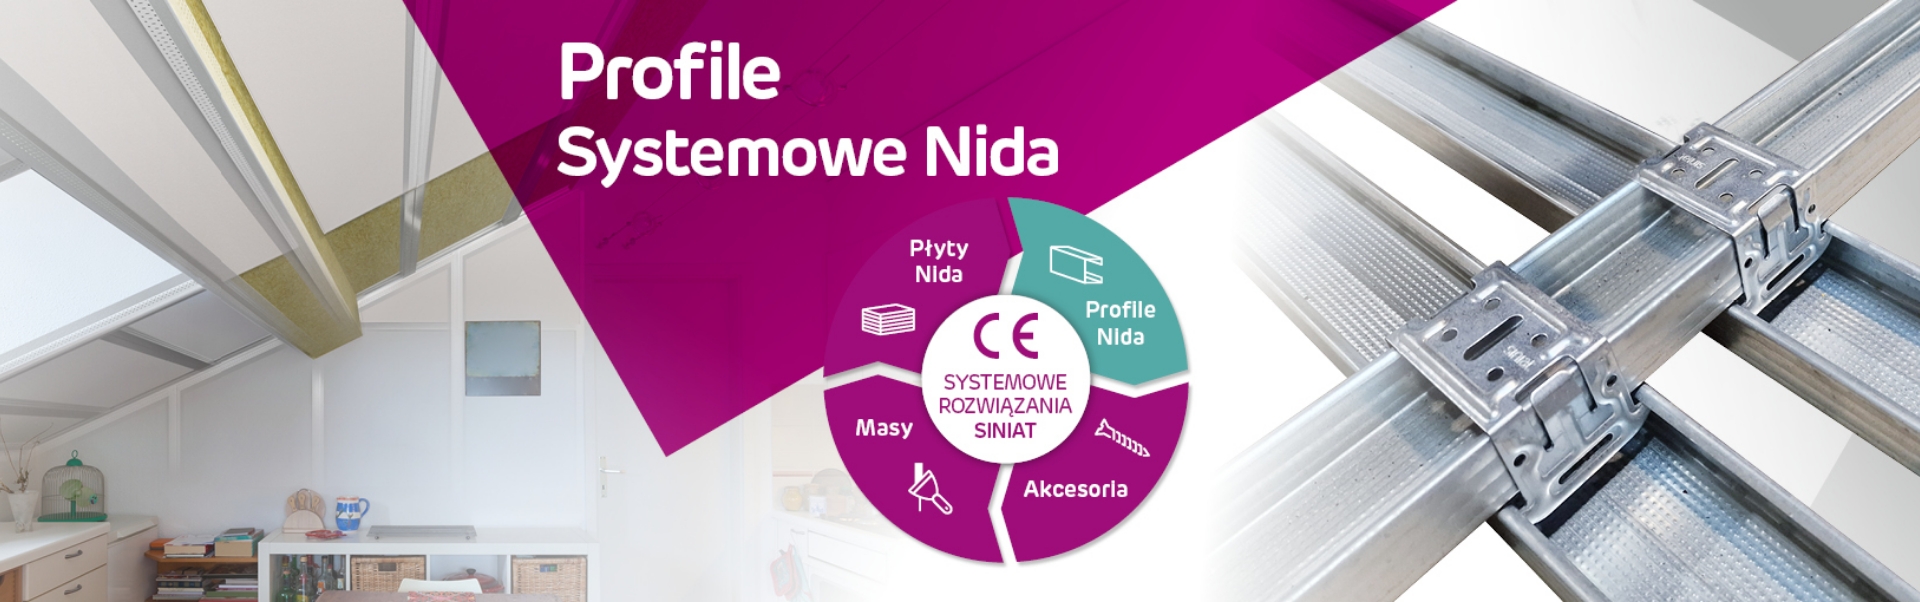 Profile Systemowe Nida